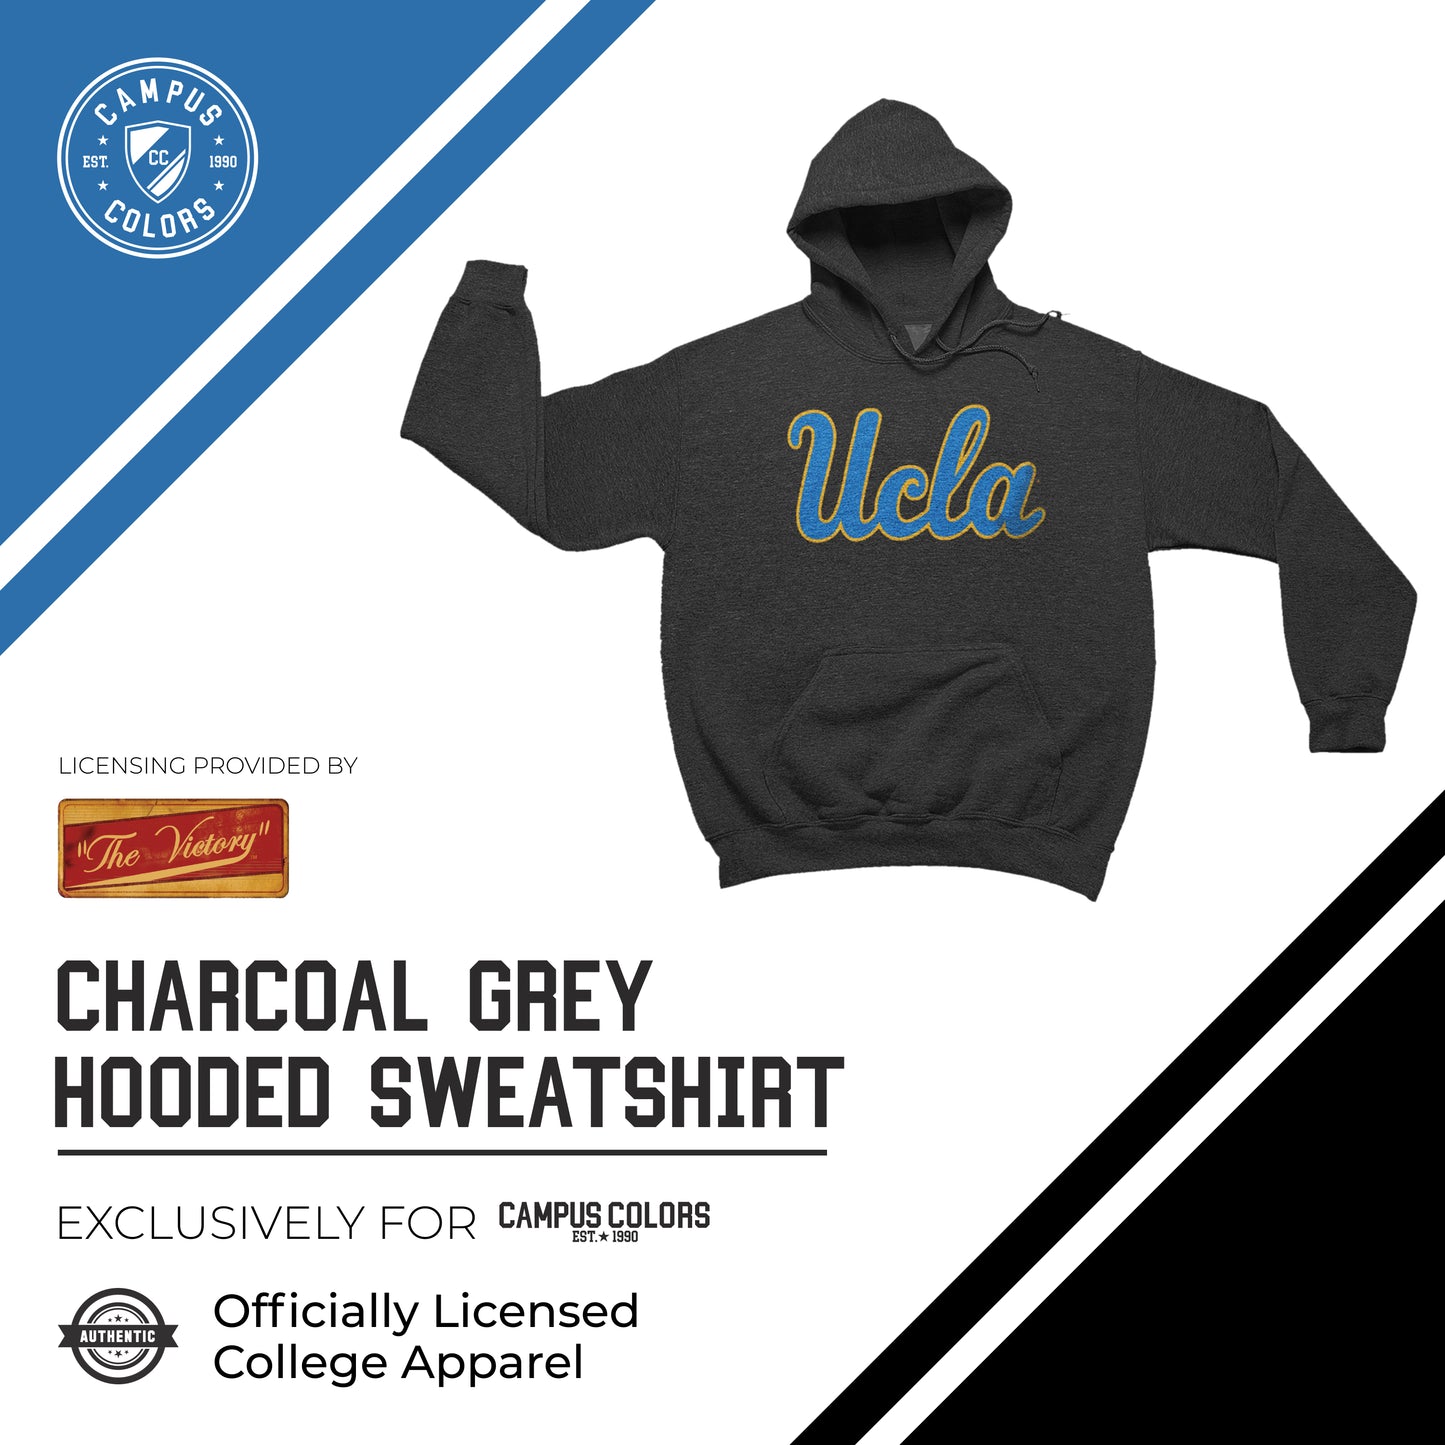 UCLA Bruins NCAA Adult Cotton Blend Charcoal Hooded Sweatshirt - Charcoal